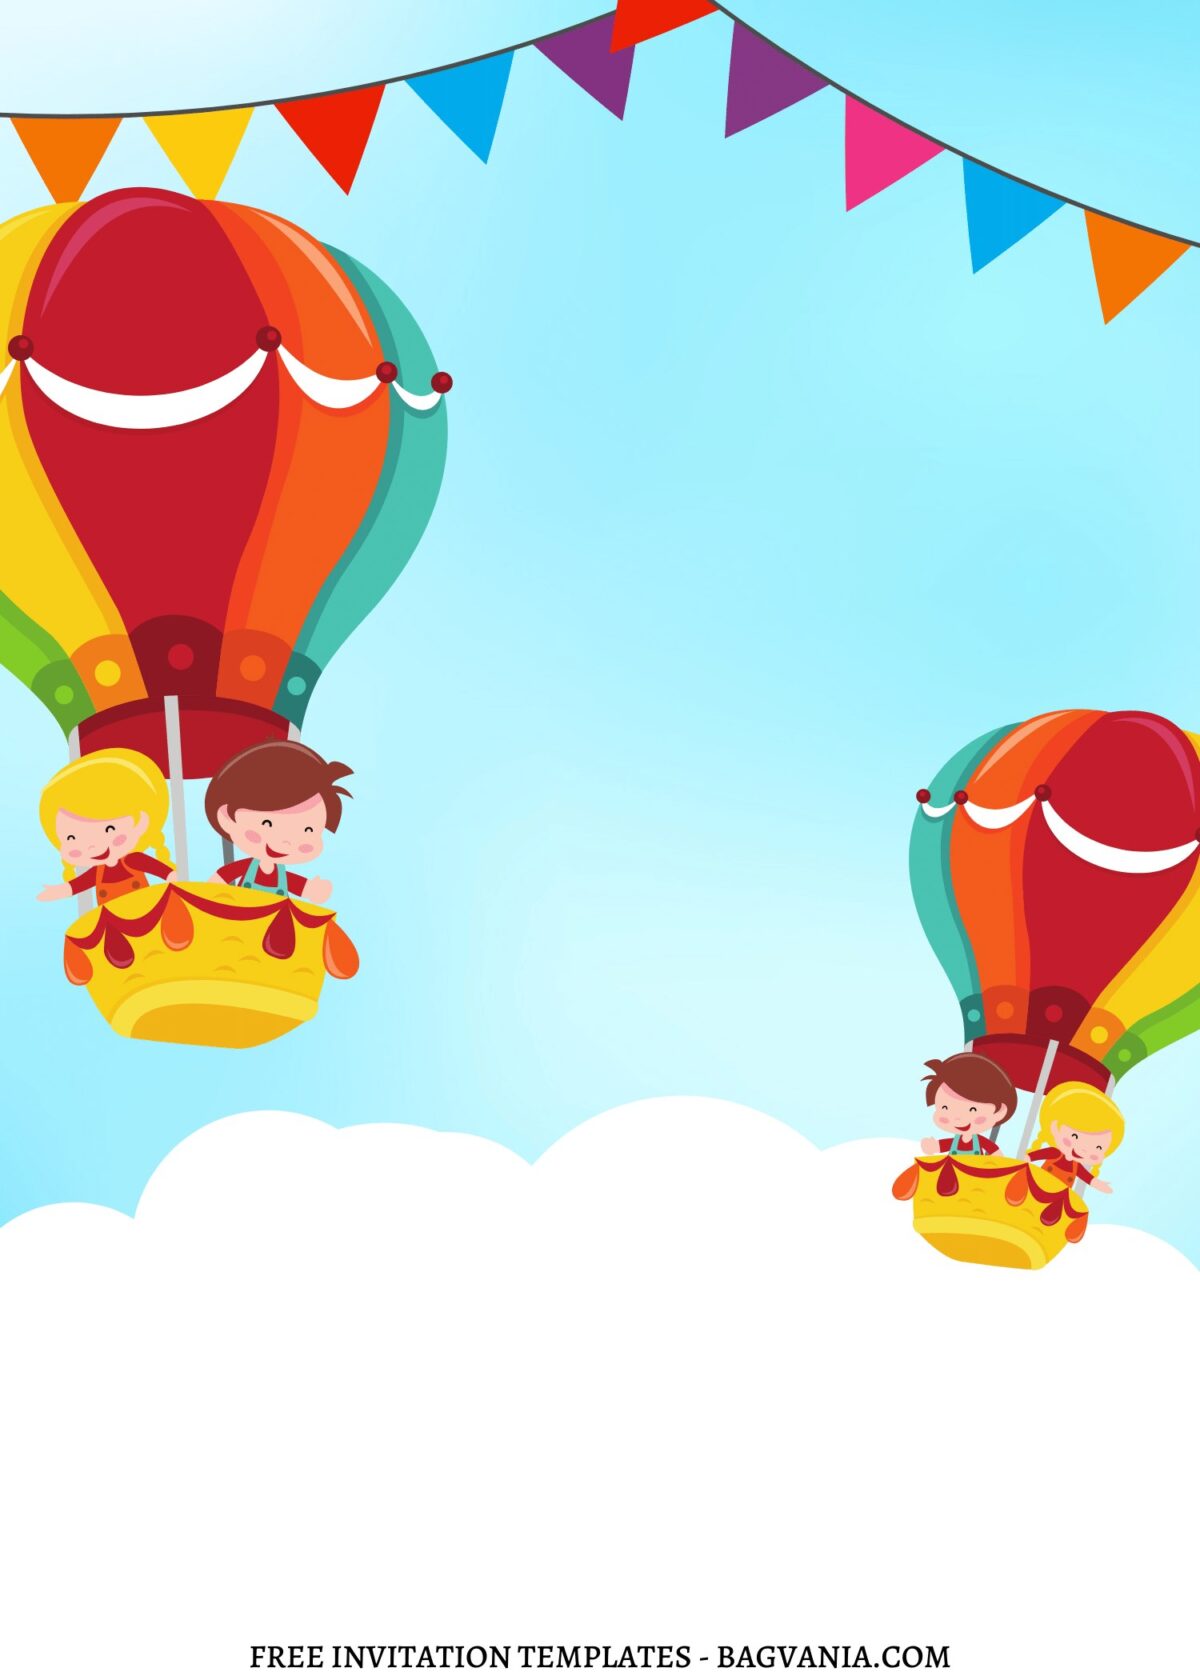 FREE EDITABLE - 10+ Safari Hot Air Balloon Canva Birthday Invitation Templates with colorful bunting flags